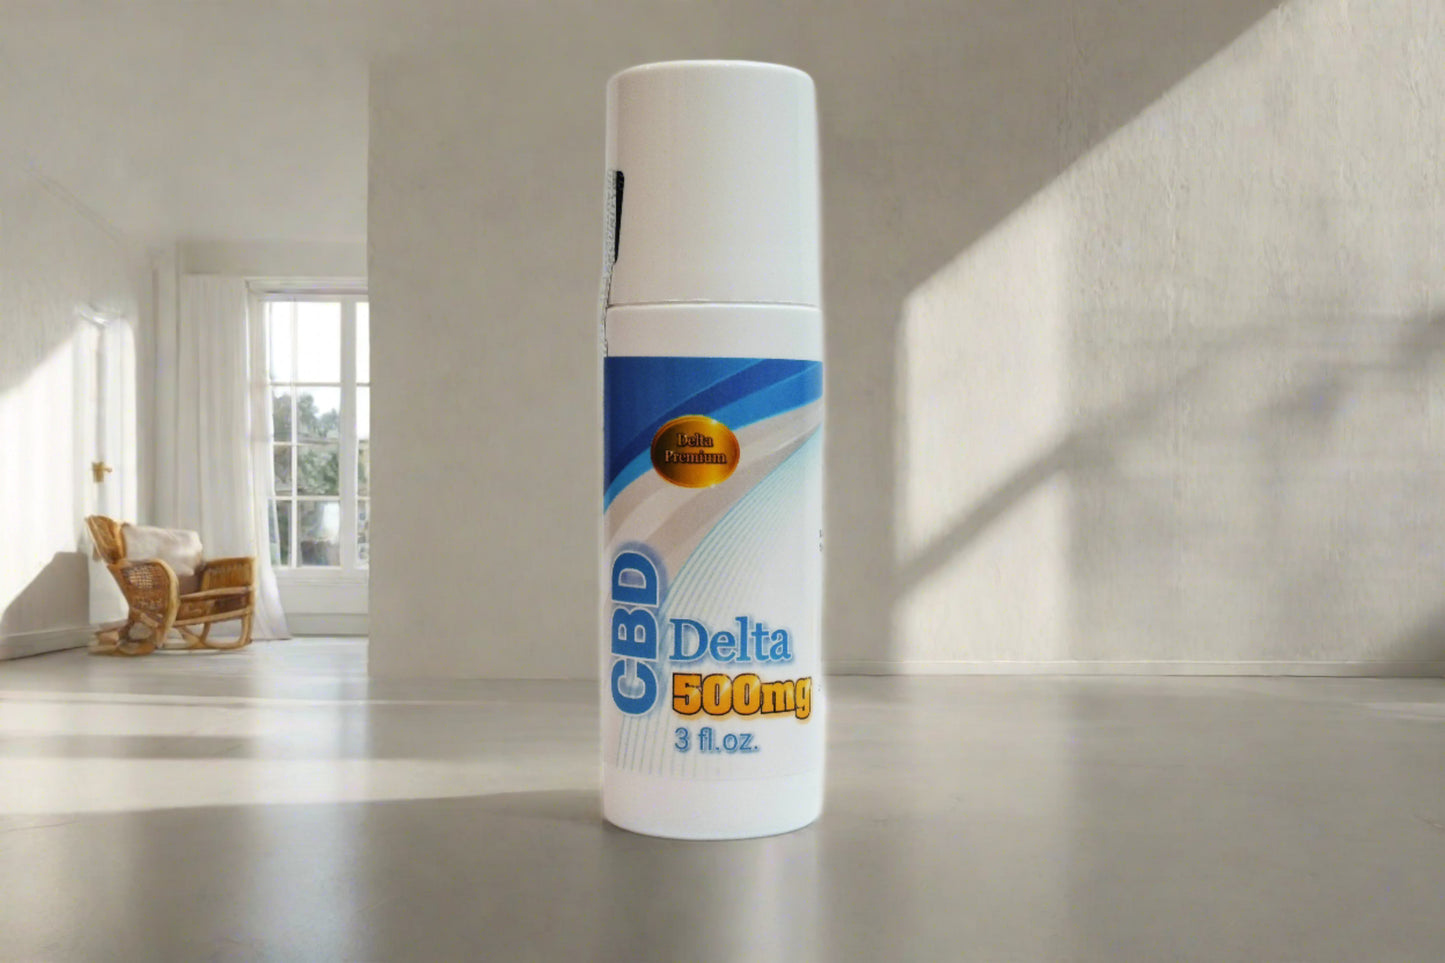 Delta Premium 500mg CBD Roll-on Freeze. Cooling roll-on application. Organic Hemp Derived CBD with no THC. USA Made.